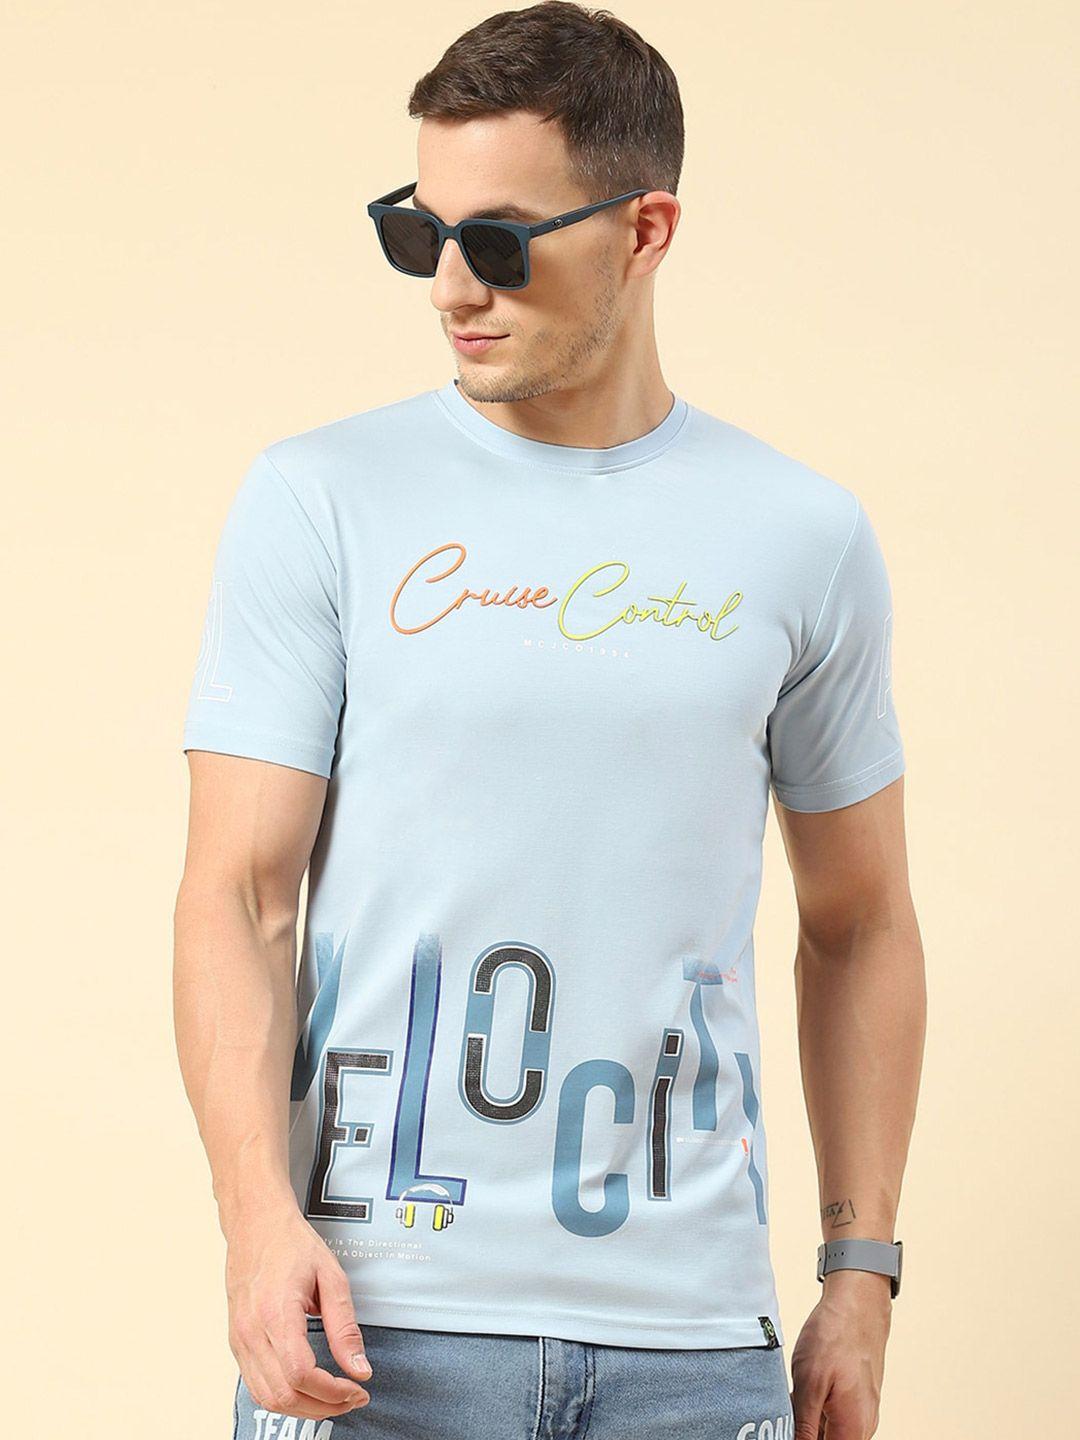 monte-carlo-typography-printed-round-neck-t-shirt